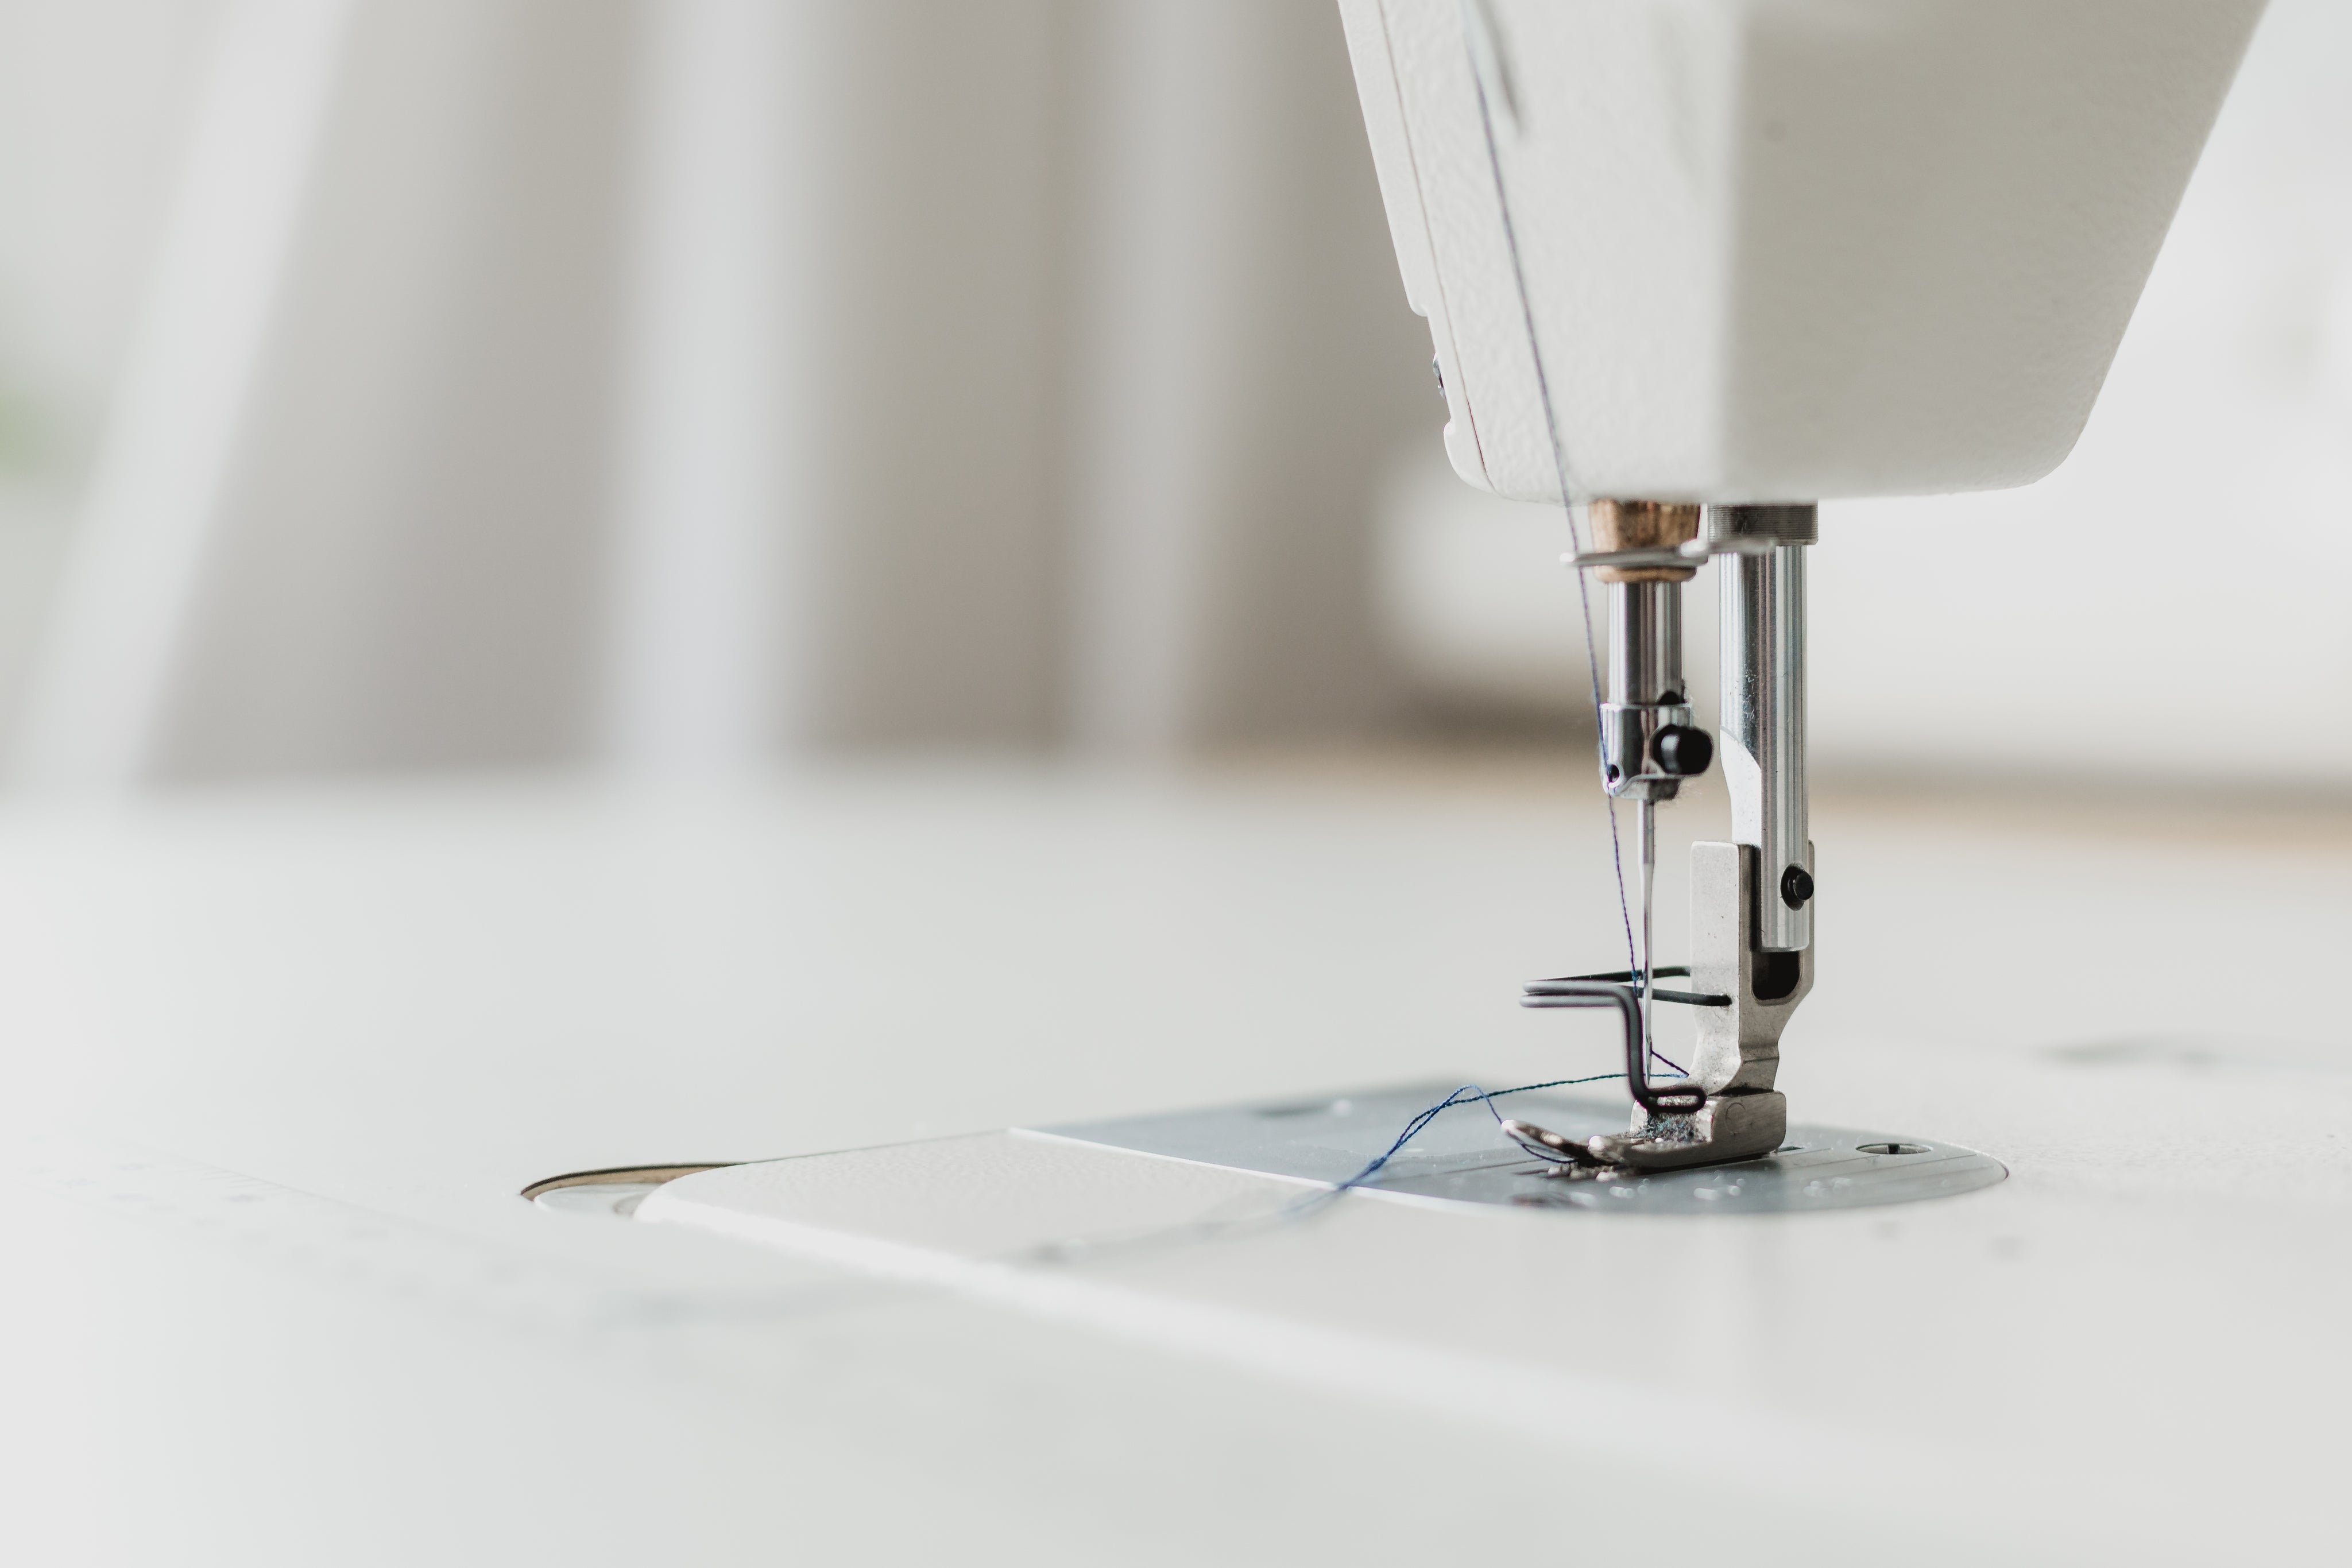 sewing-machine-needle-close-up.jpg